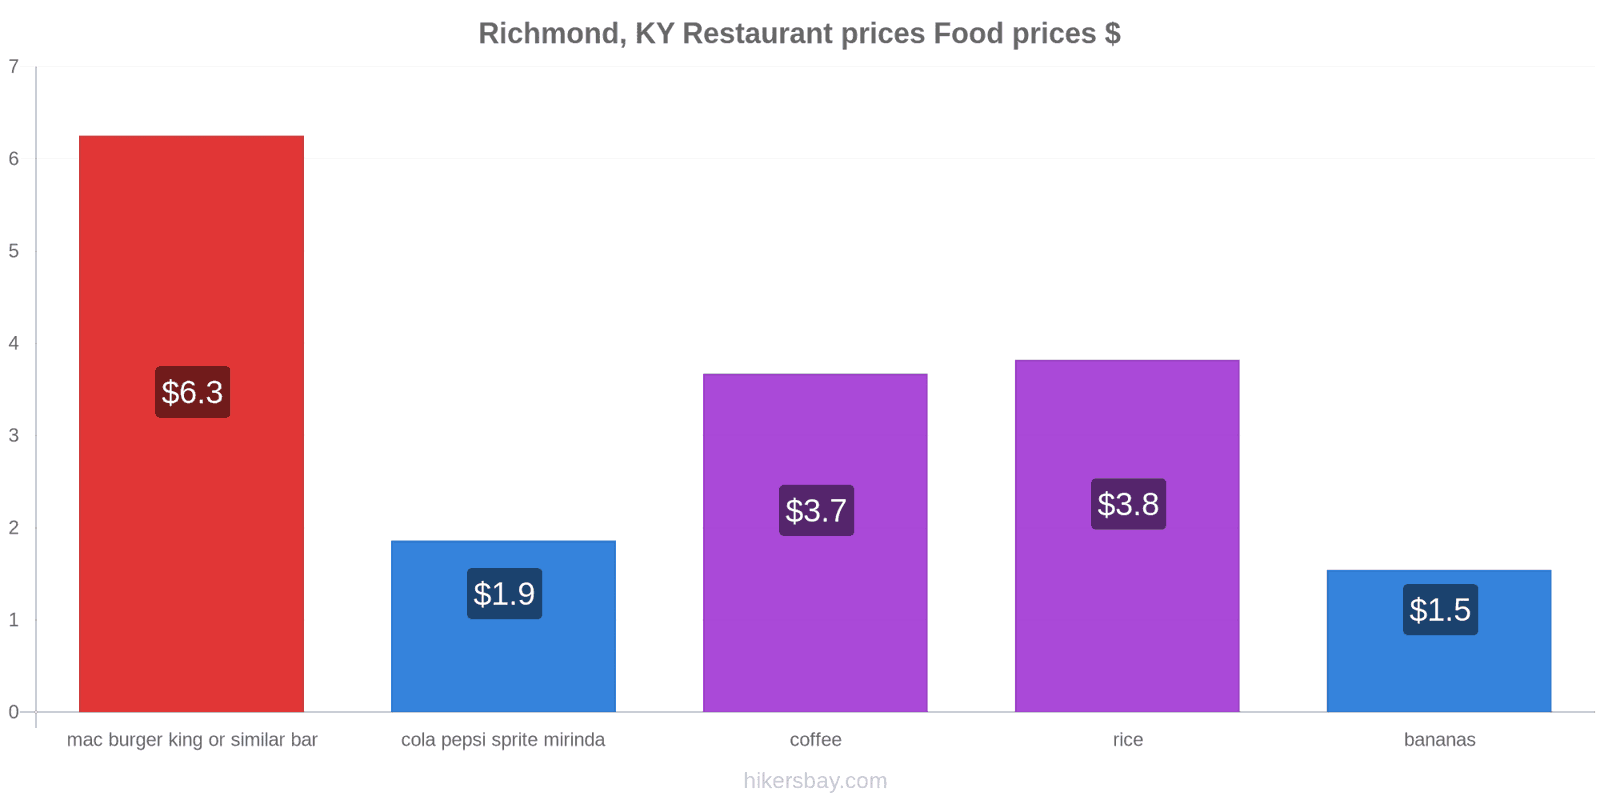 Richmond, KY price changes hikersbay.com